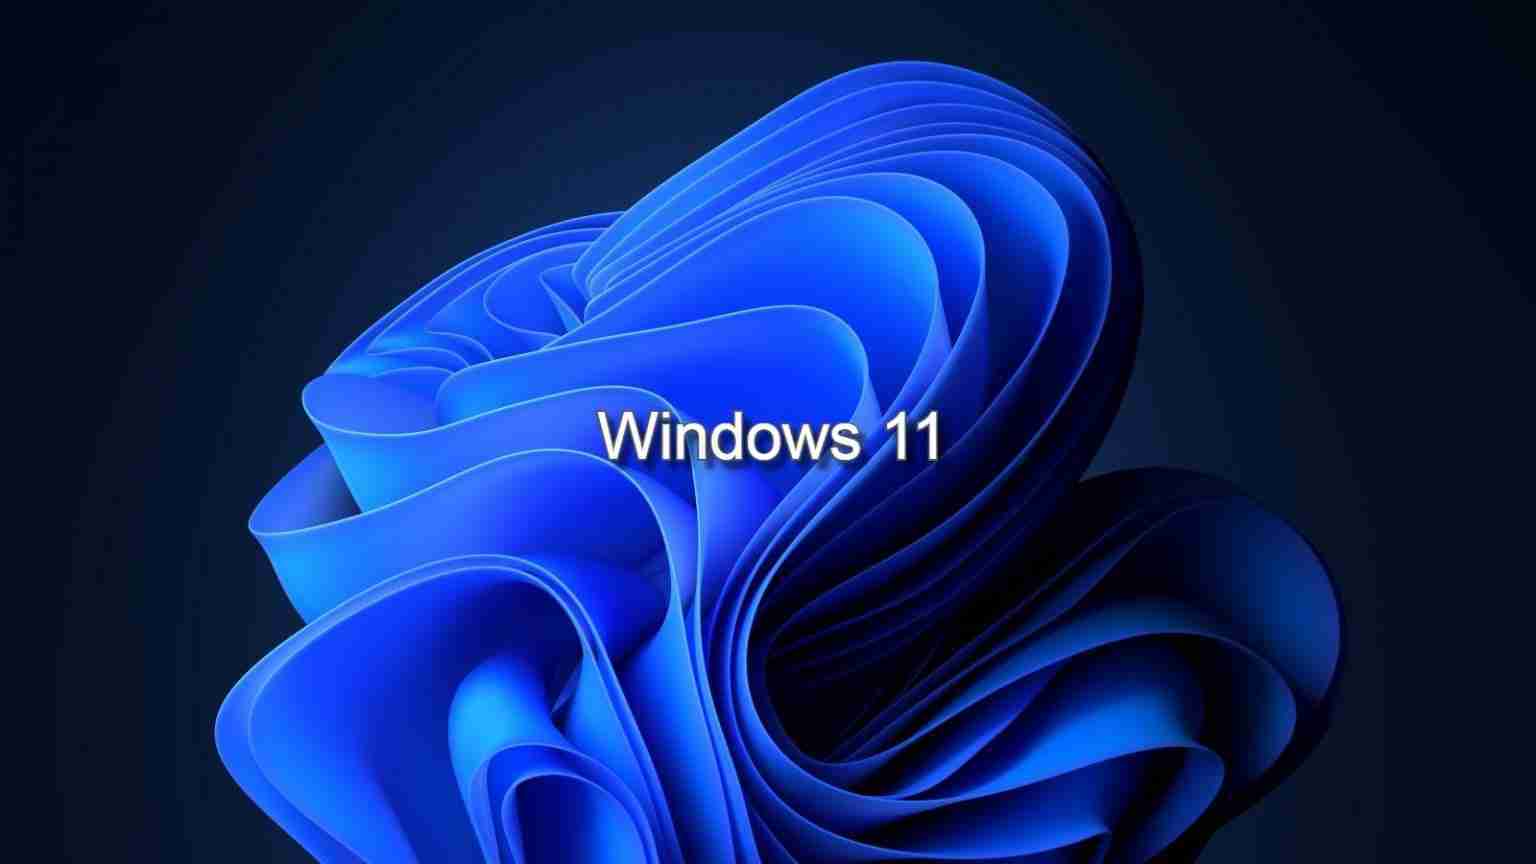 DesktopOK x64 11.06 download the new for windows